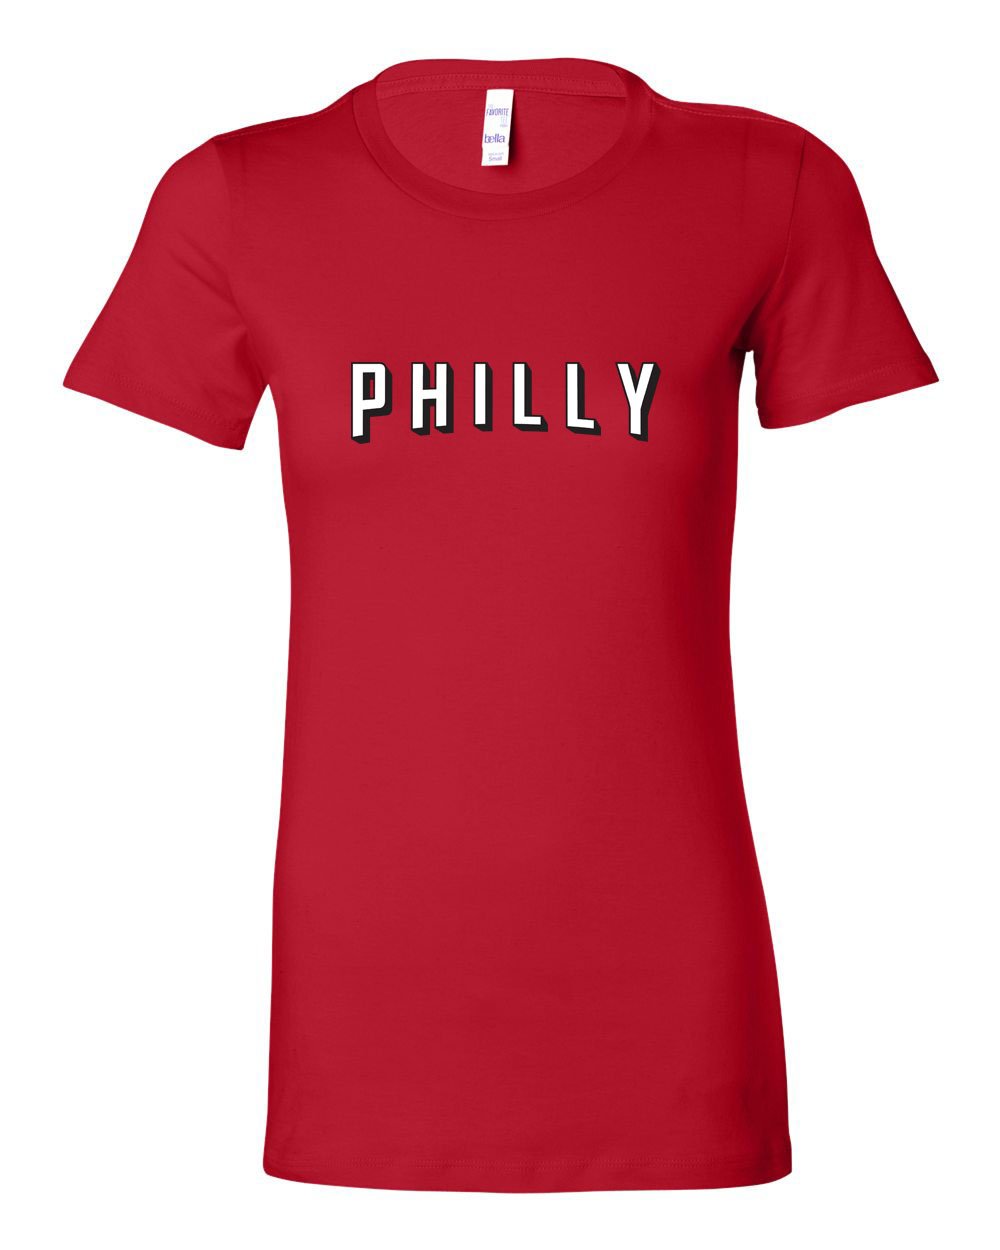 Philly-Flix LADIES Junior-Fit T-Shirt